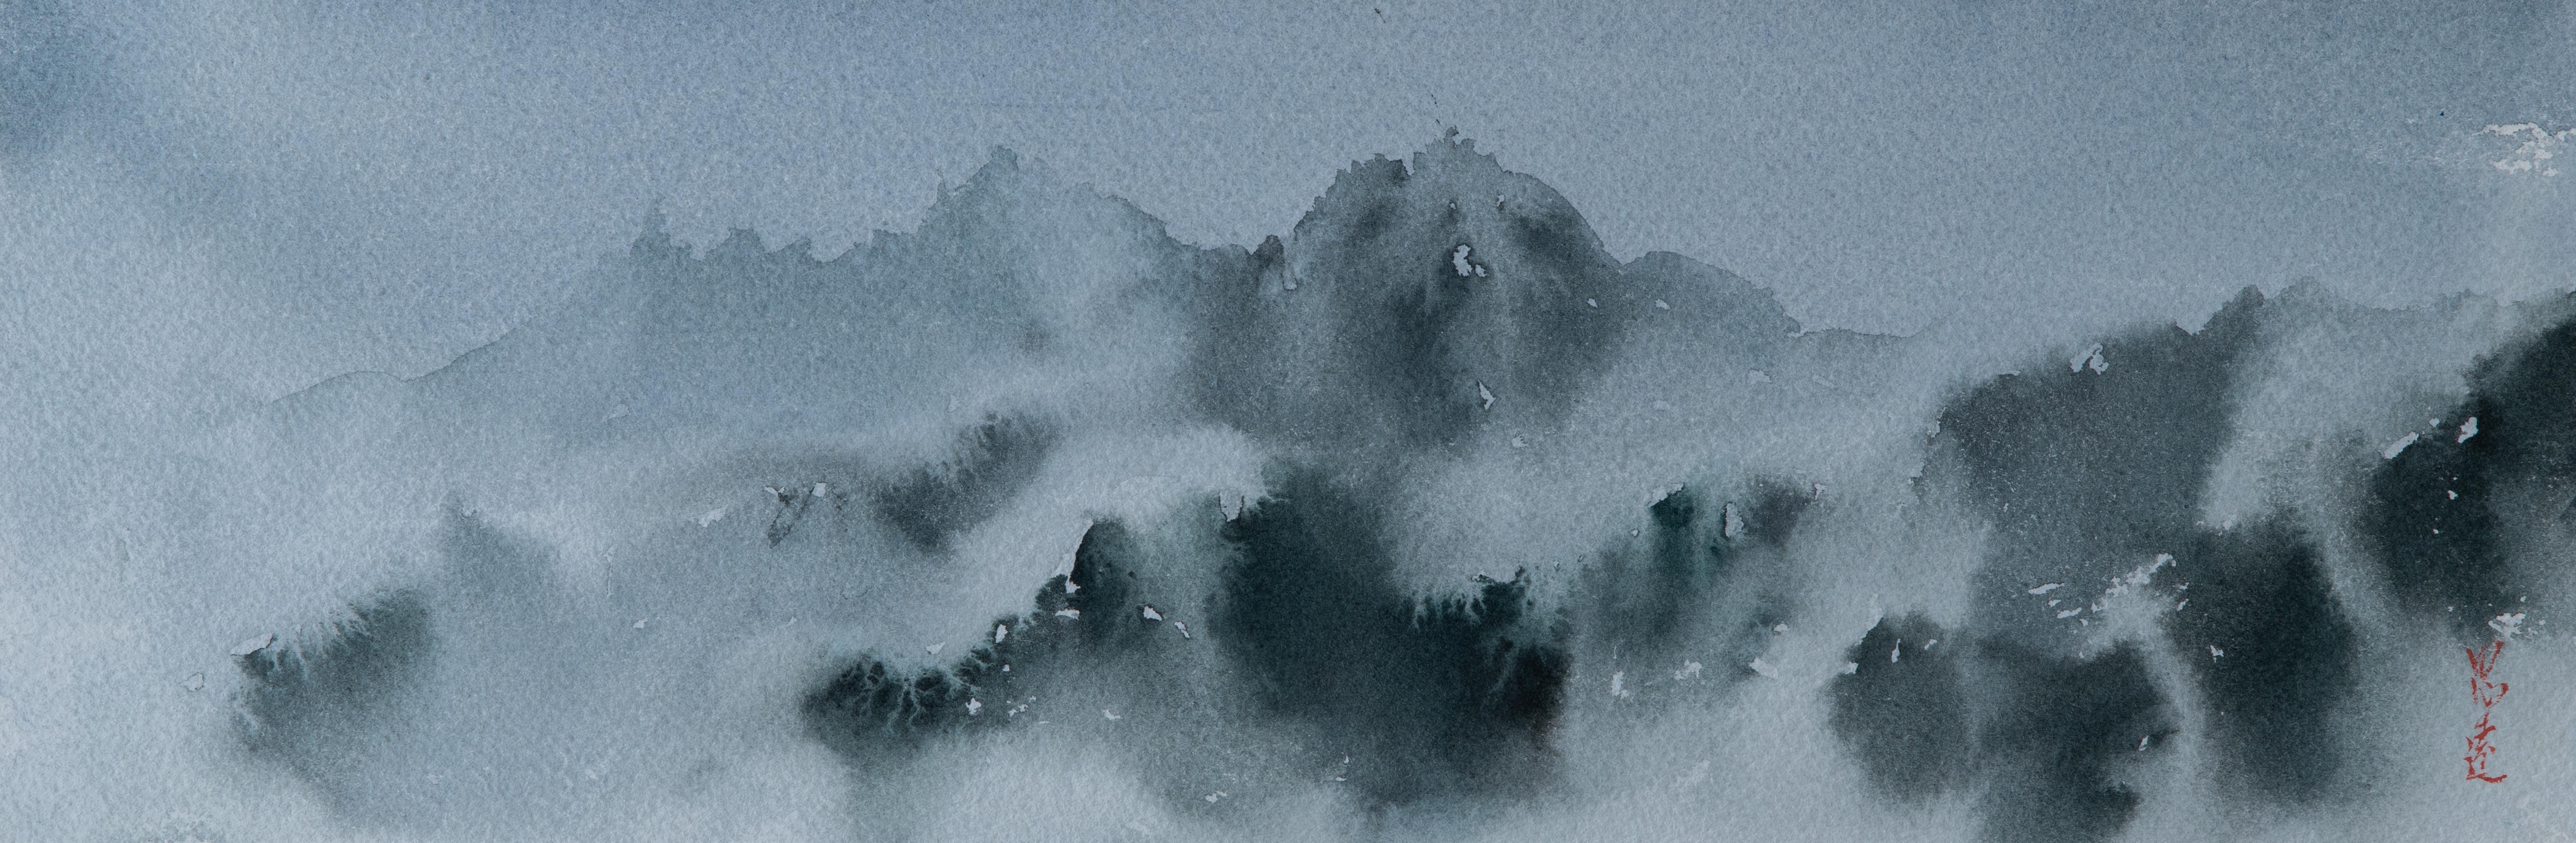 Mountain Reverie Series 2, Original Painting - Art by Siyuan Ma